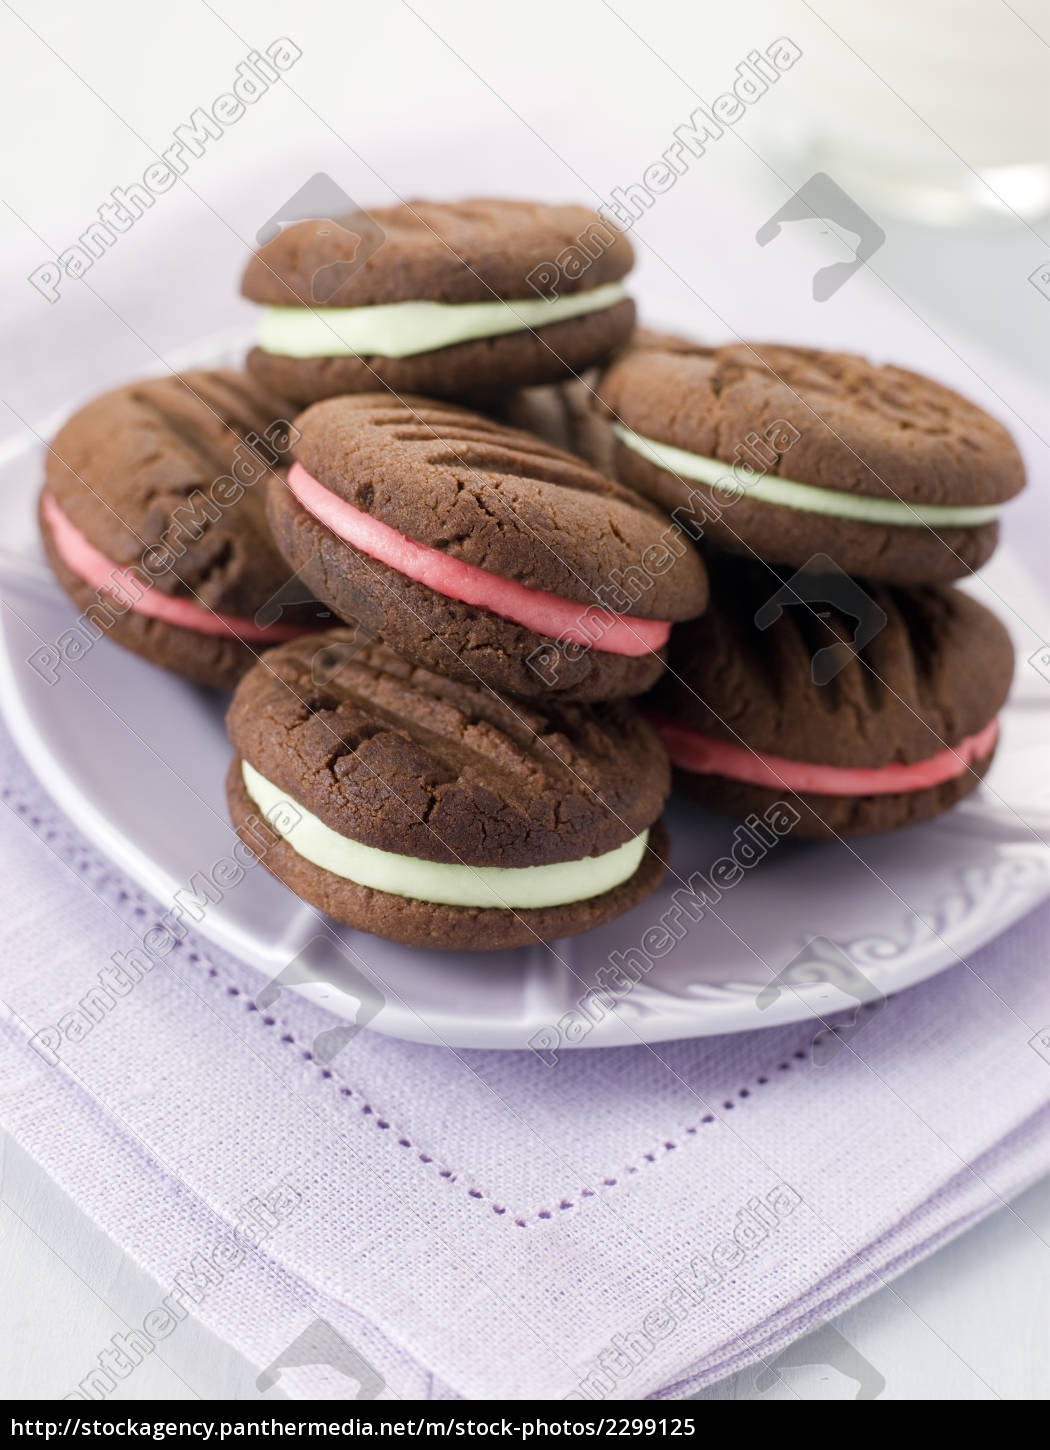 chocolate kiss kekse gefüllt mit pfefferminzcreme - Stockfoto ...